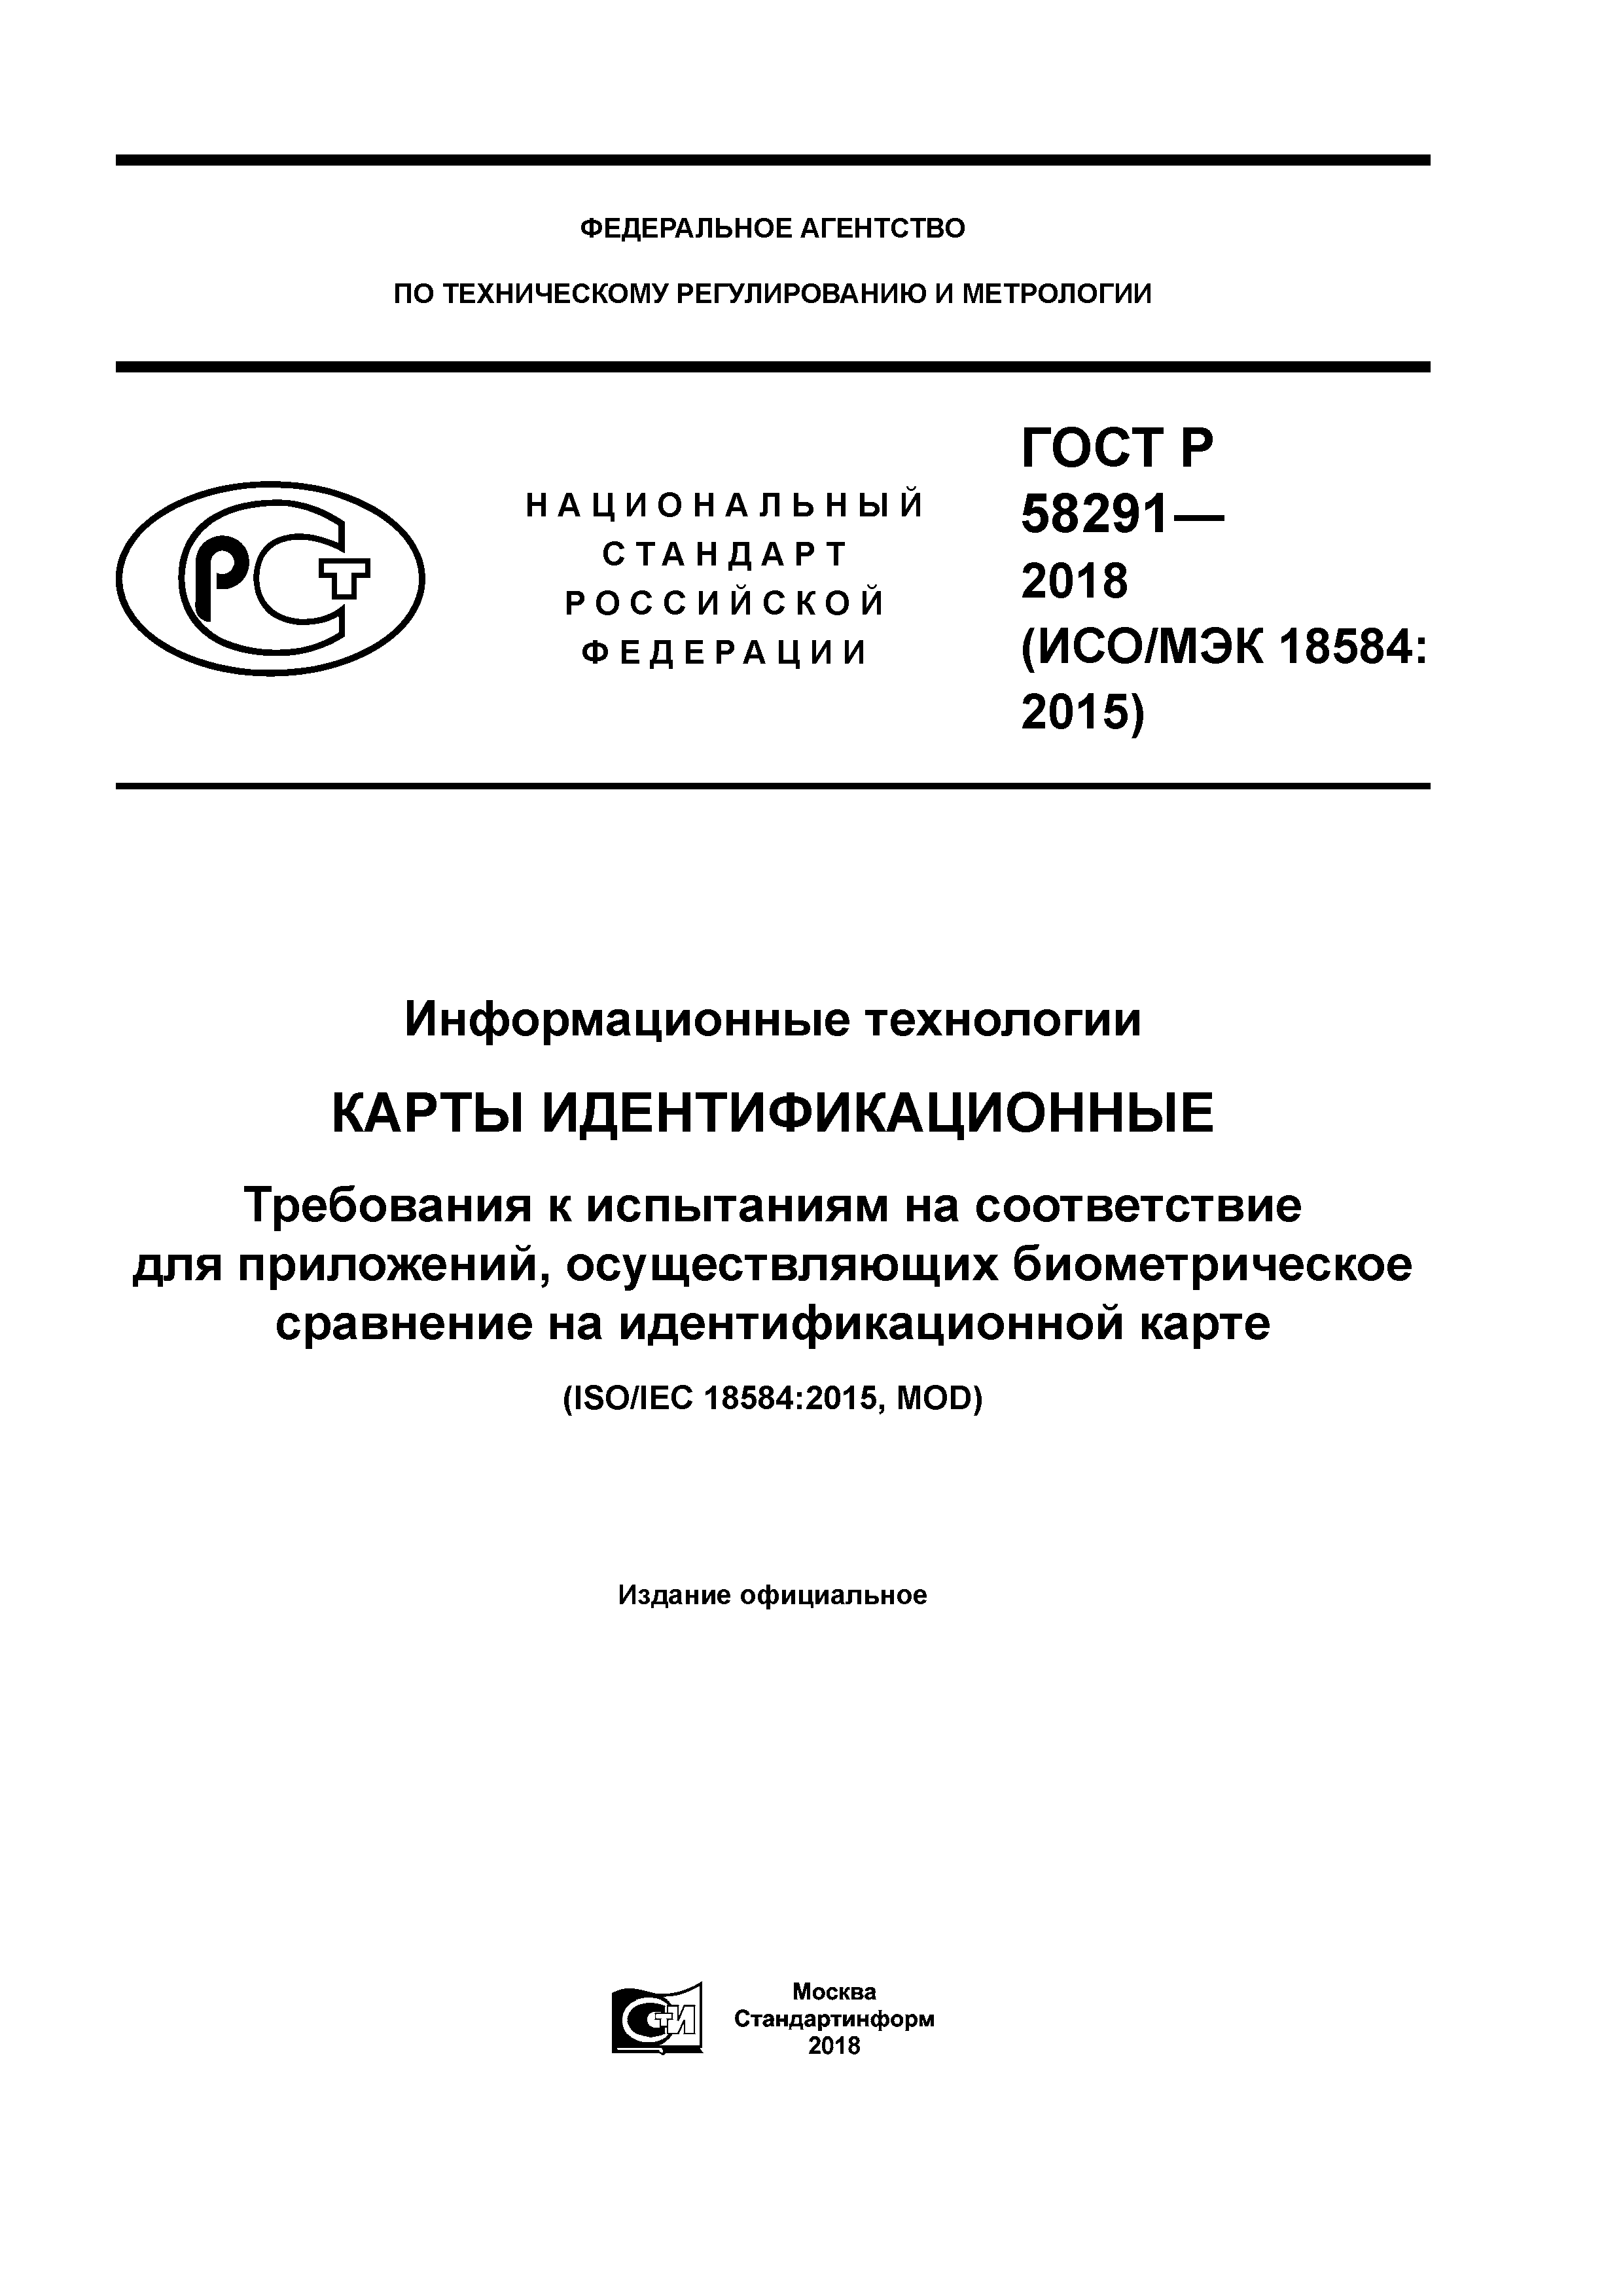 ГОСТ Р 58291-2018